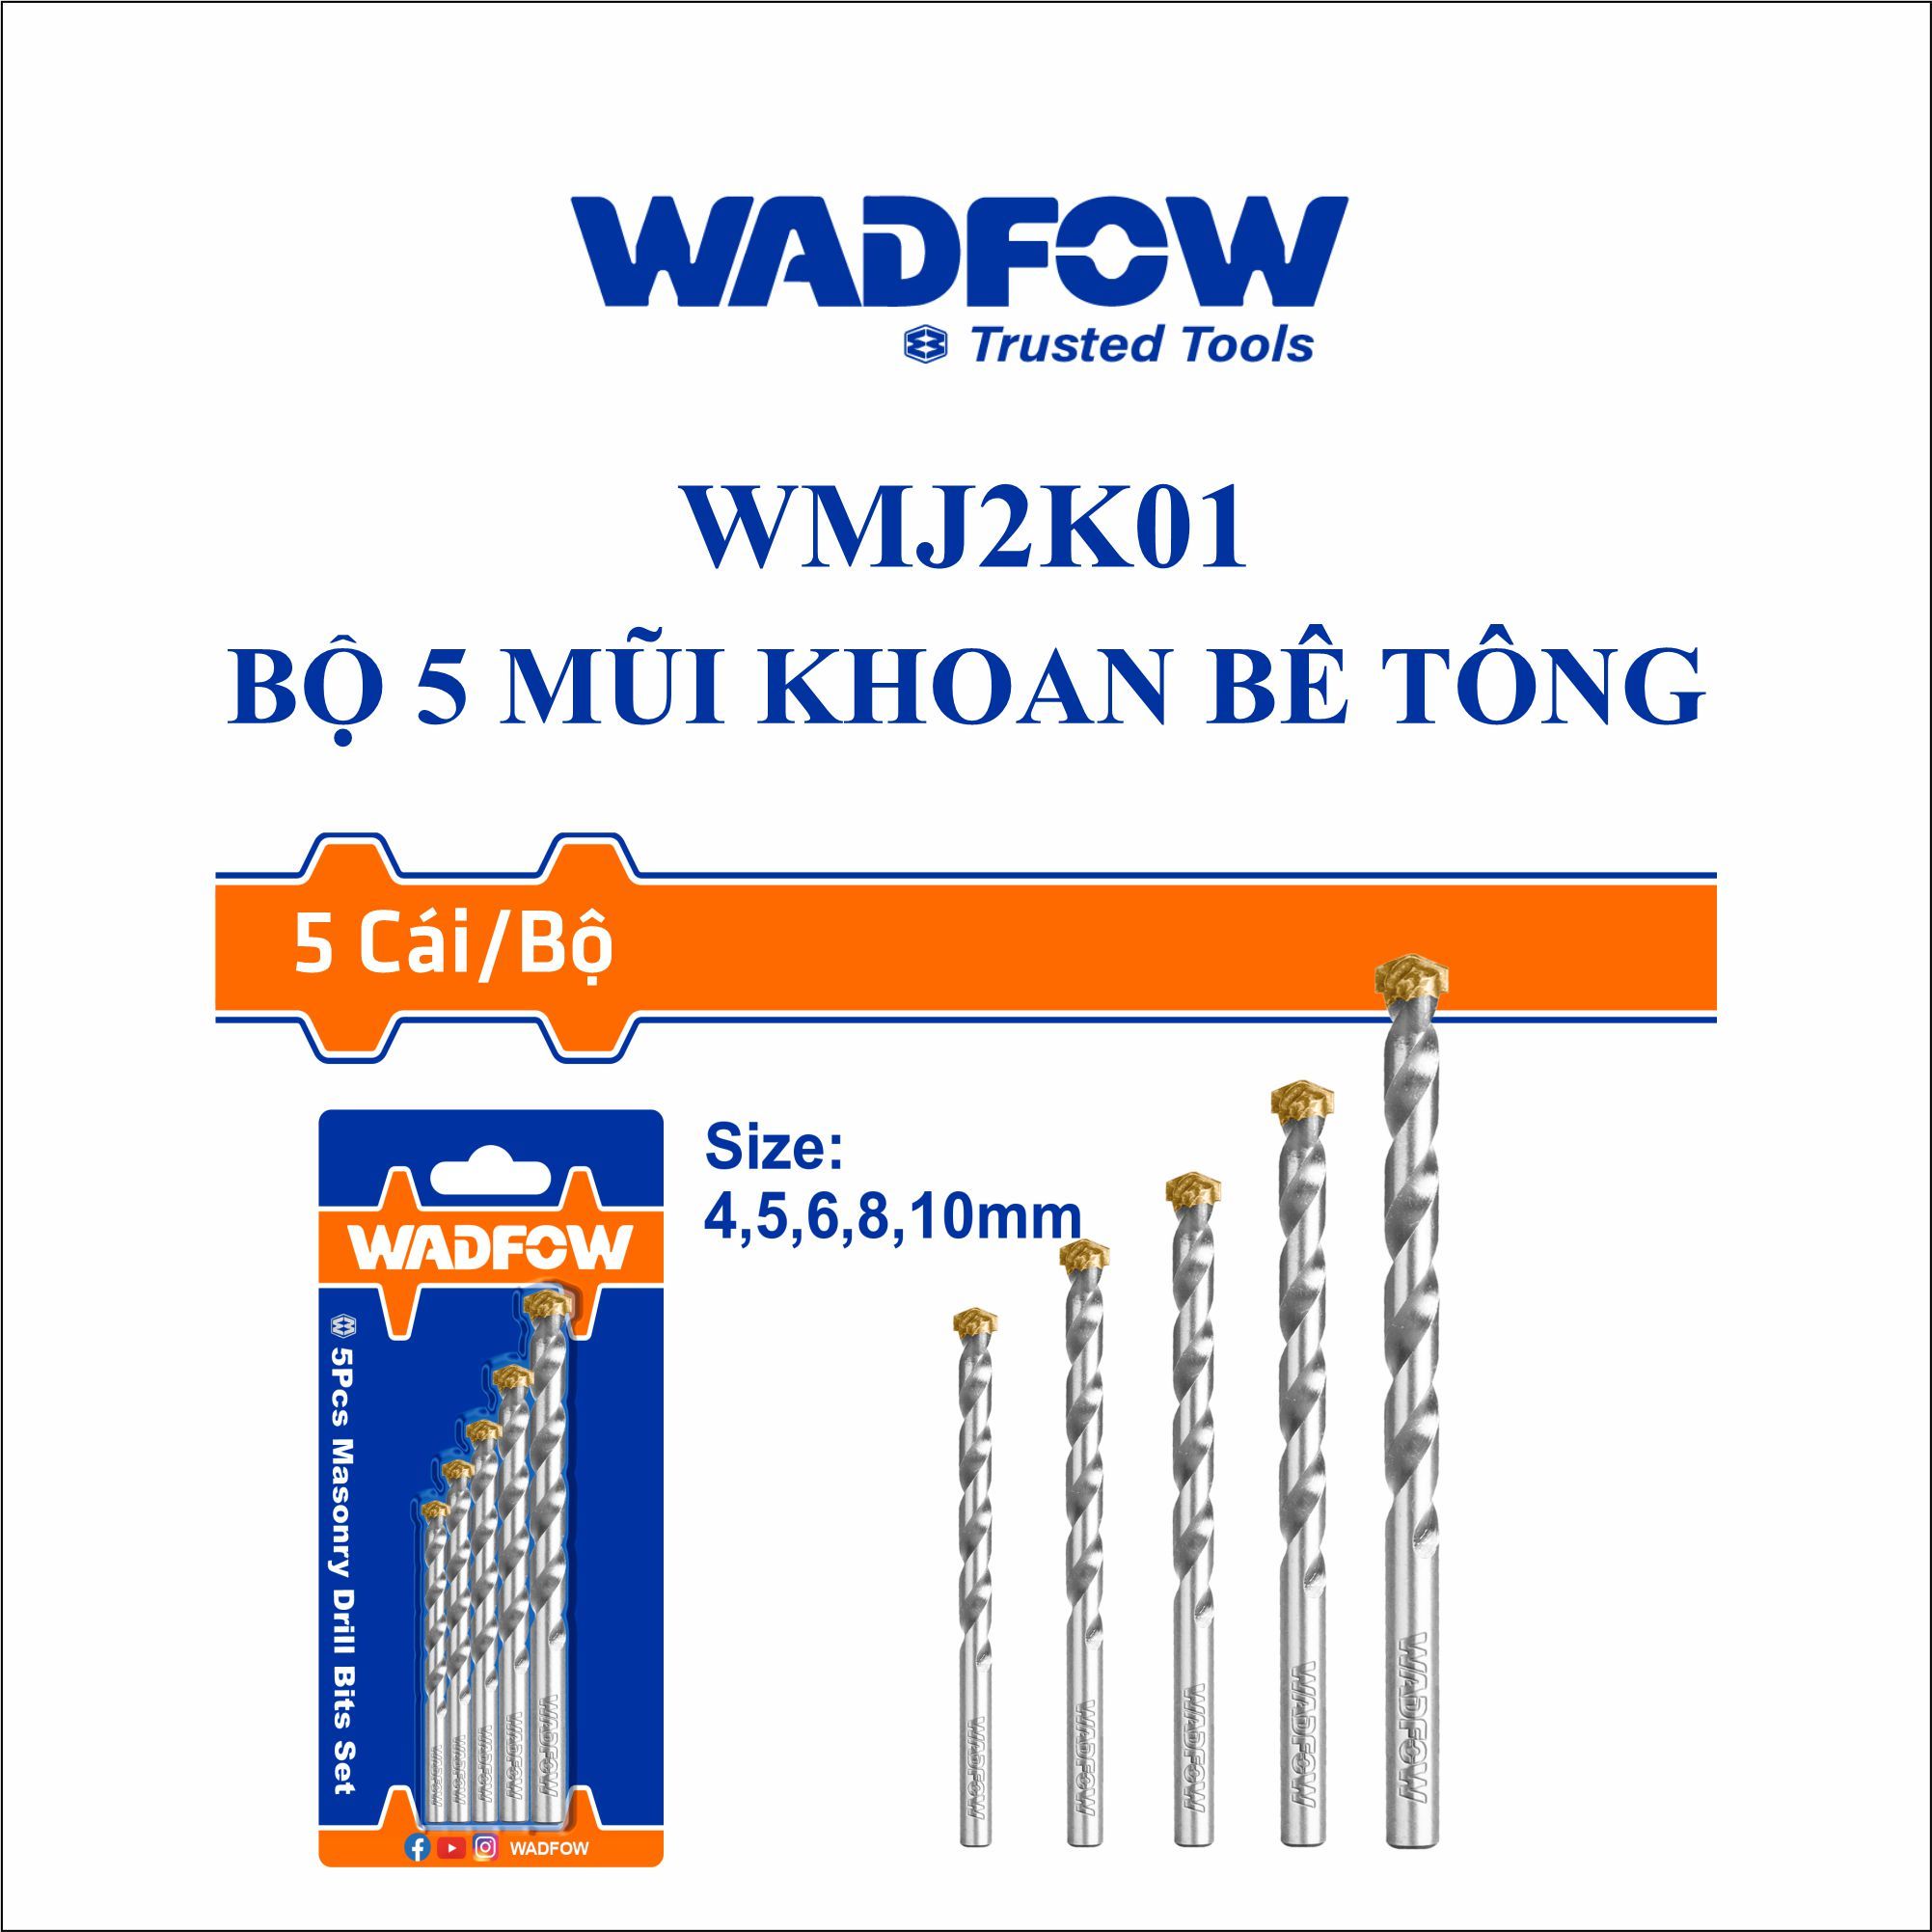  Bộ 5 mũi khoan bê tông WADFOW WMJ2K01 